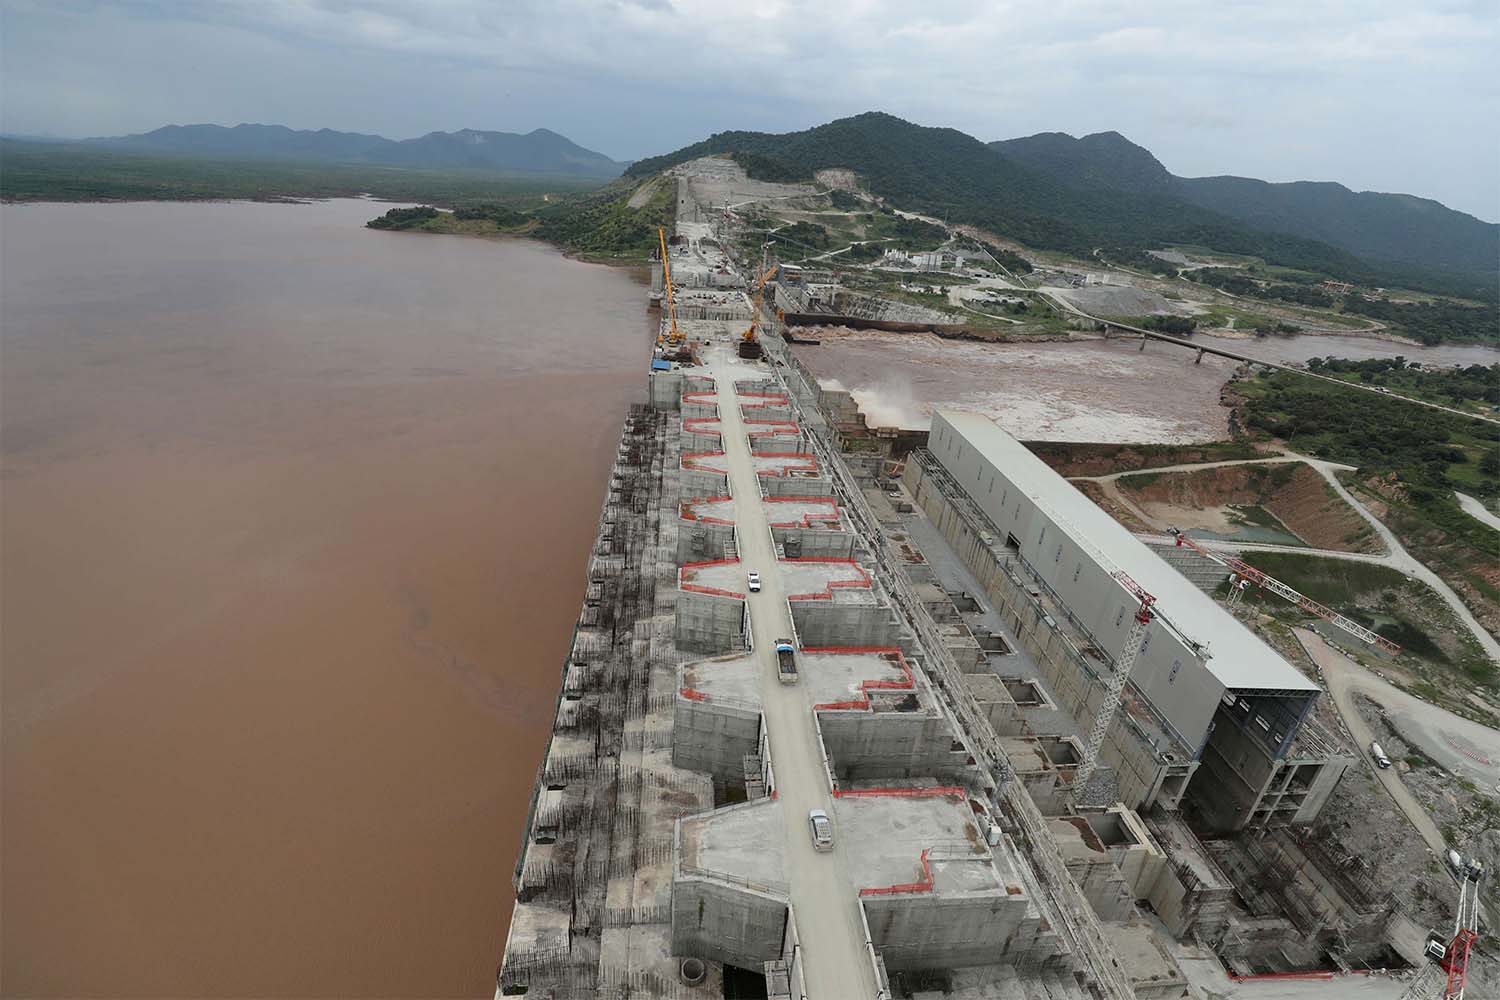 The construction of Grand Ethiopian Renaissance Dam